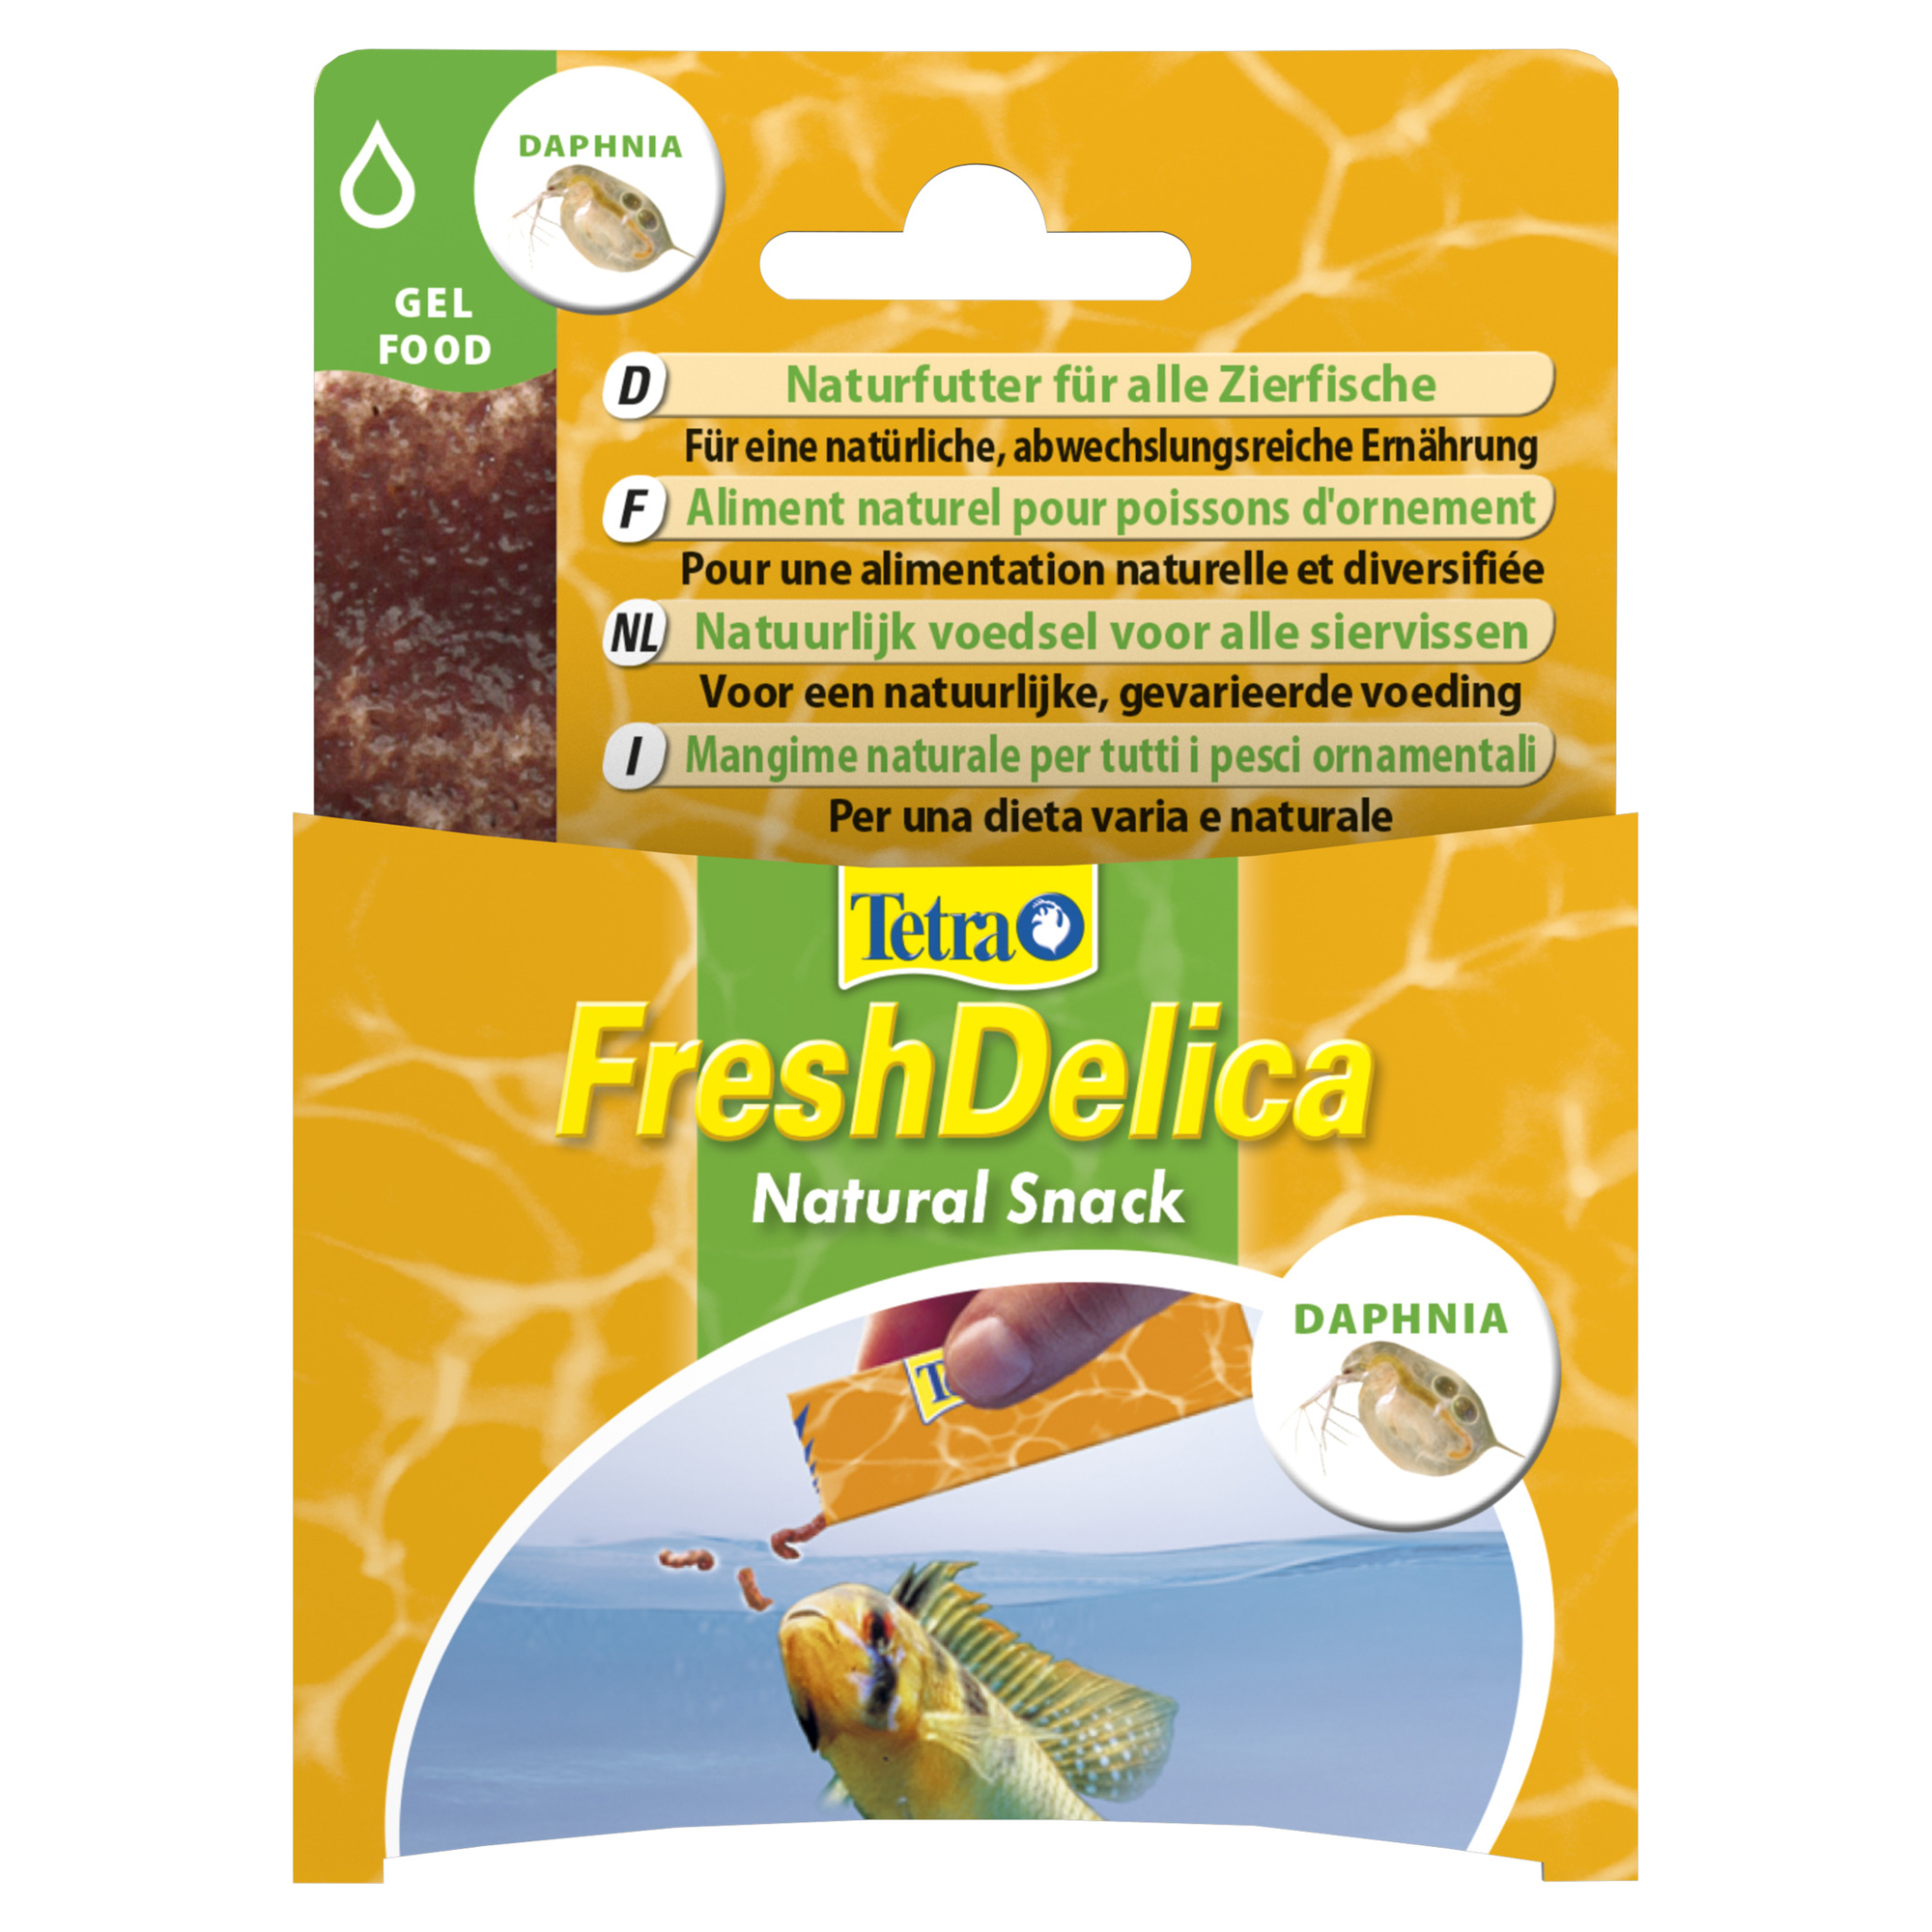 Fischfutter "Fresh Delica" 48 g Natural Snack Daphnia + product picture